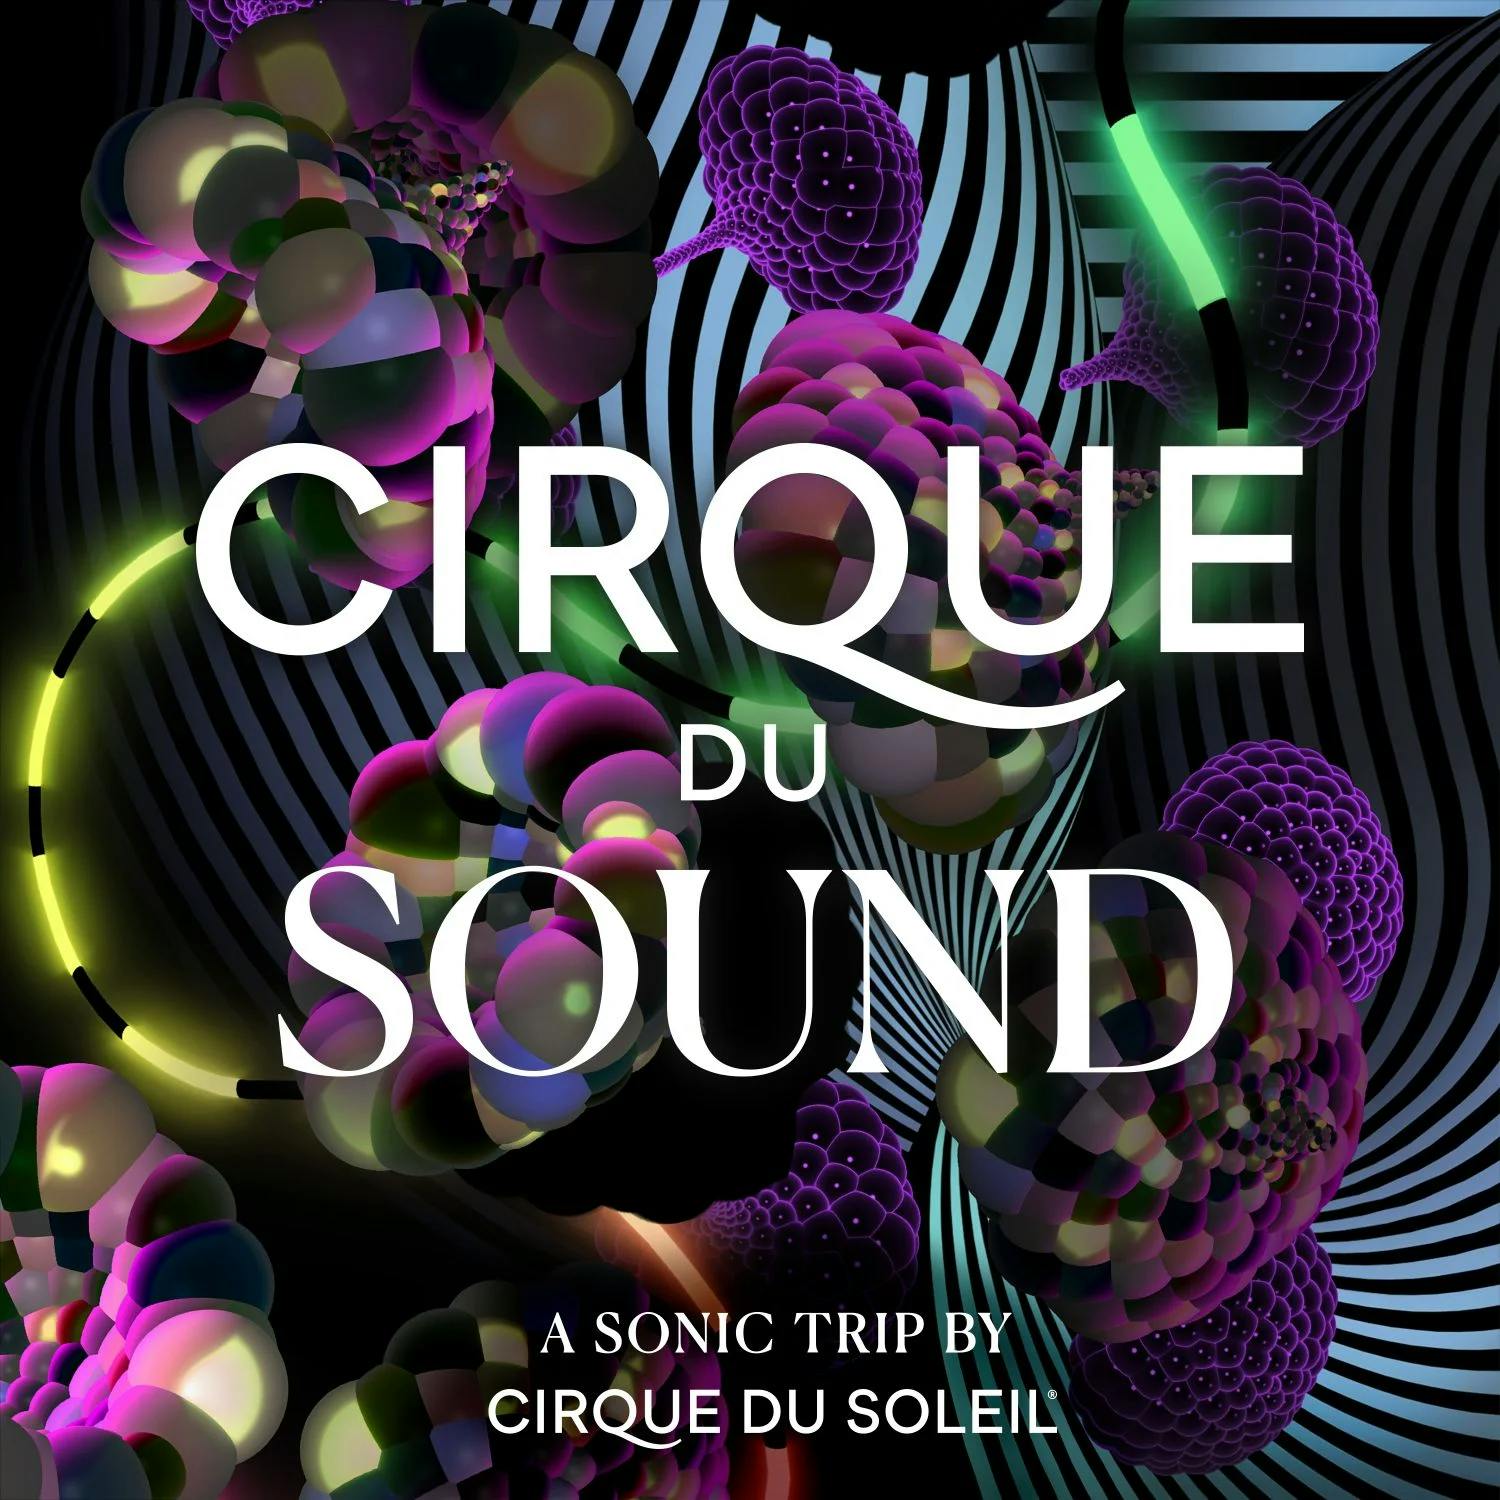 Review: Cirque du Sound from Cirque du Soleil